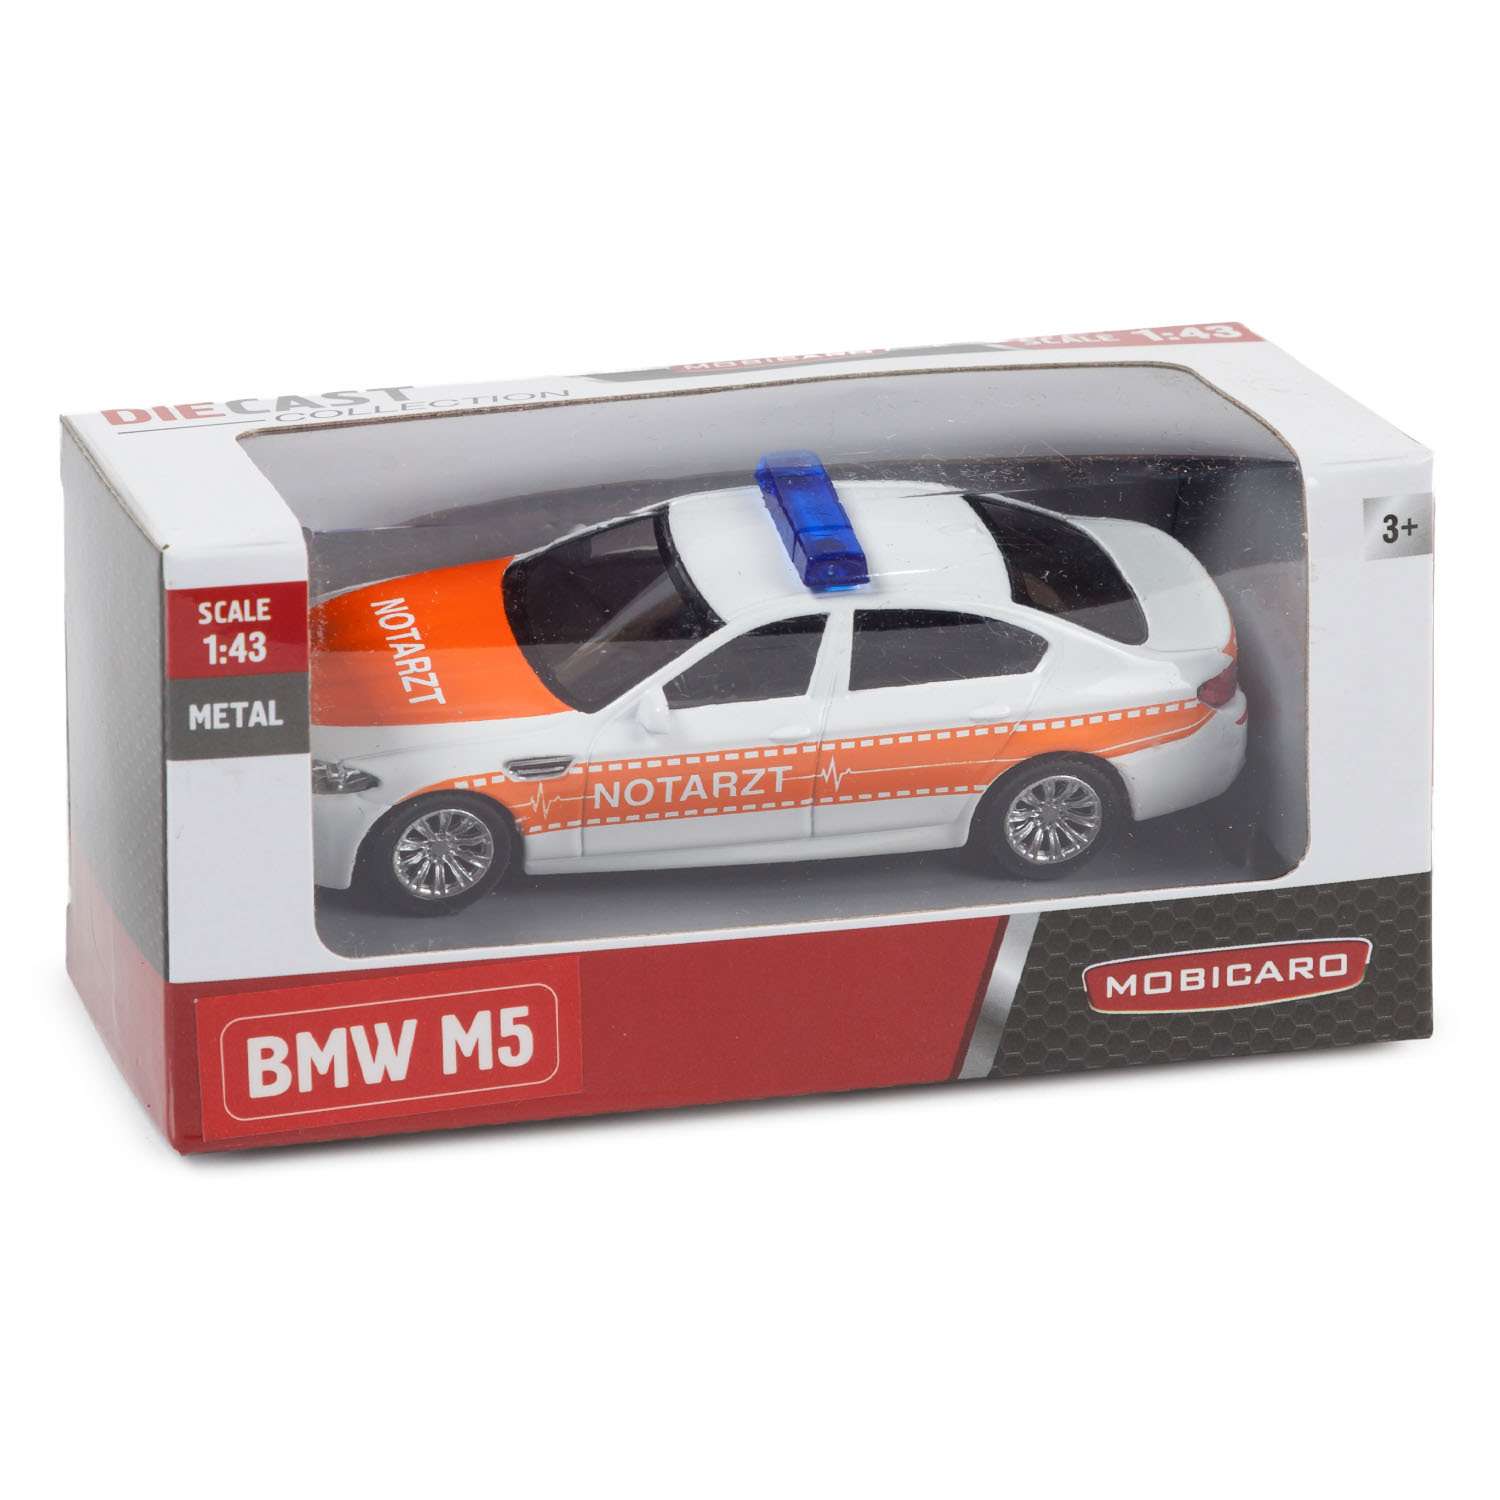 Спецтранспорт Mobicaro BMW M5 1:43 444003DEA - фото 3